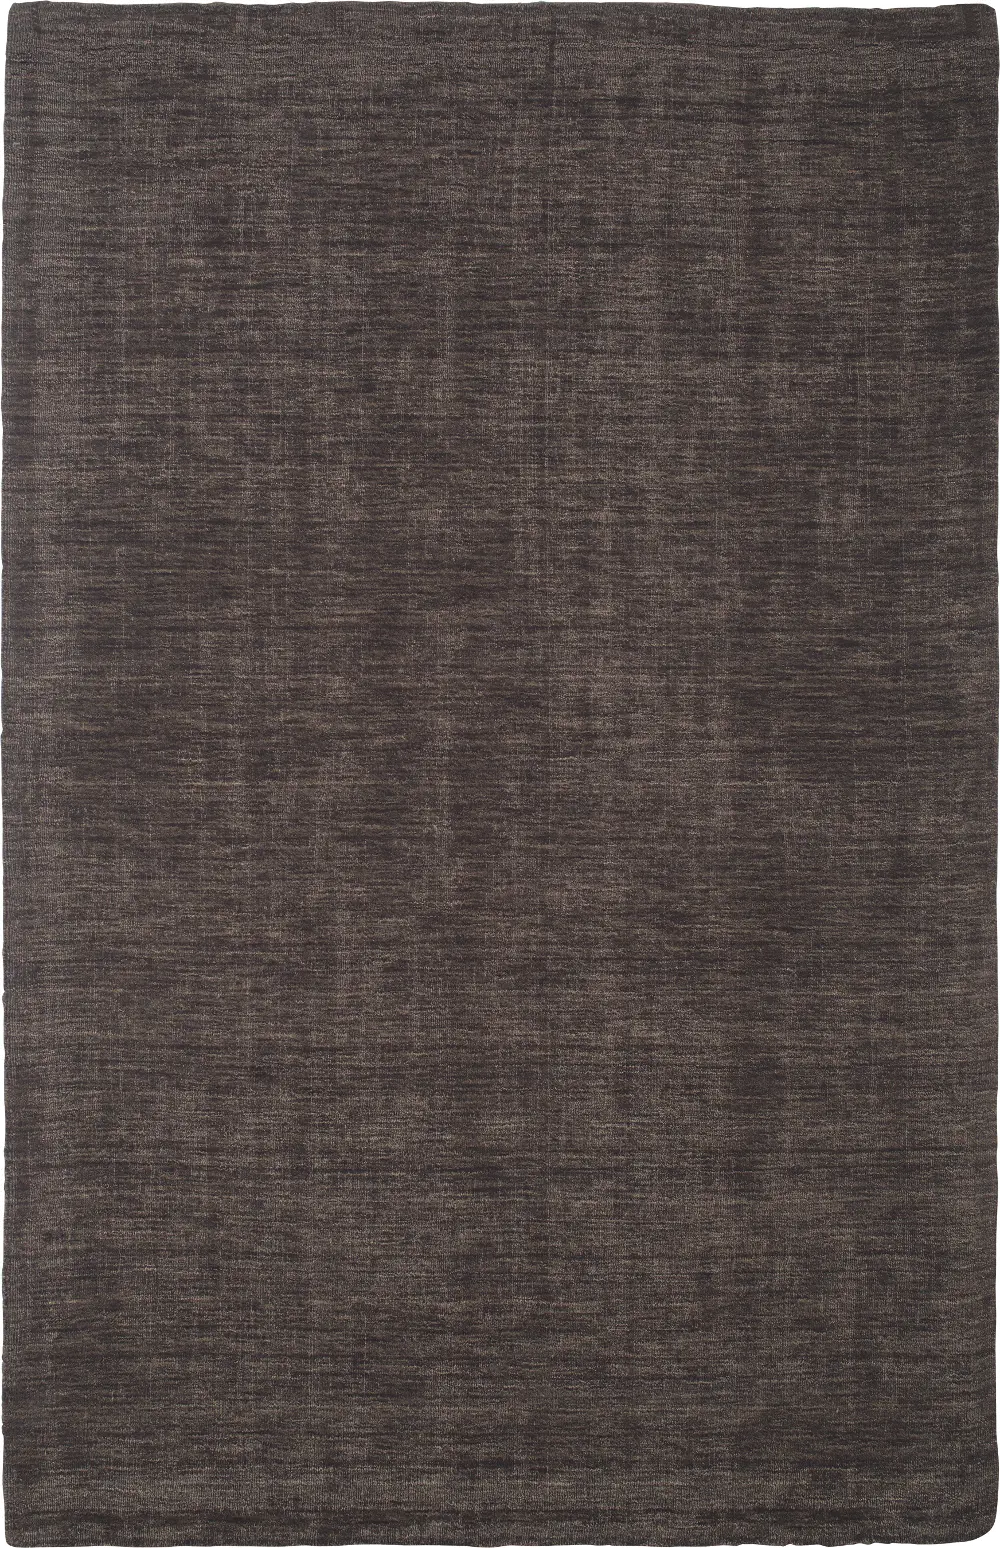 8 x 10 Large Charcoal Gray Area Rug - Basics-1